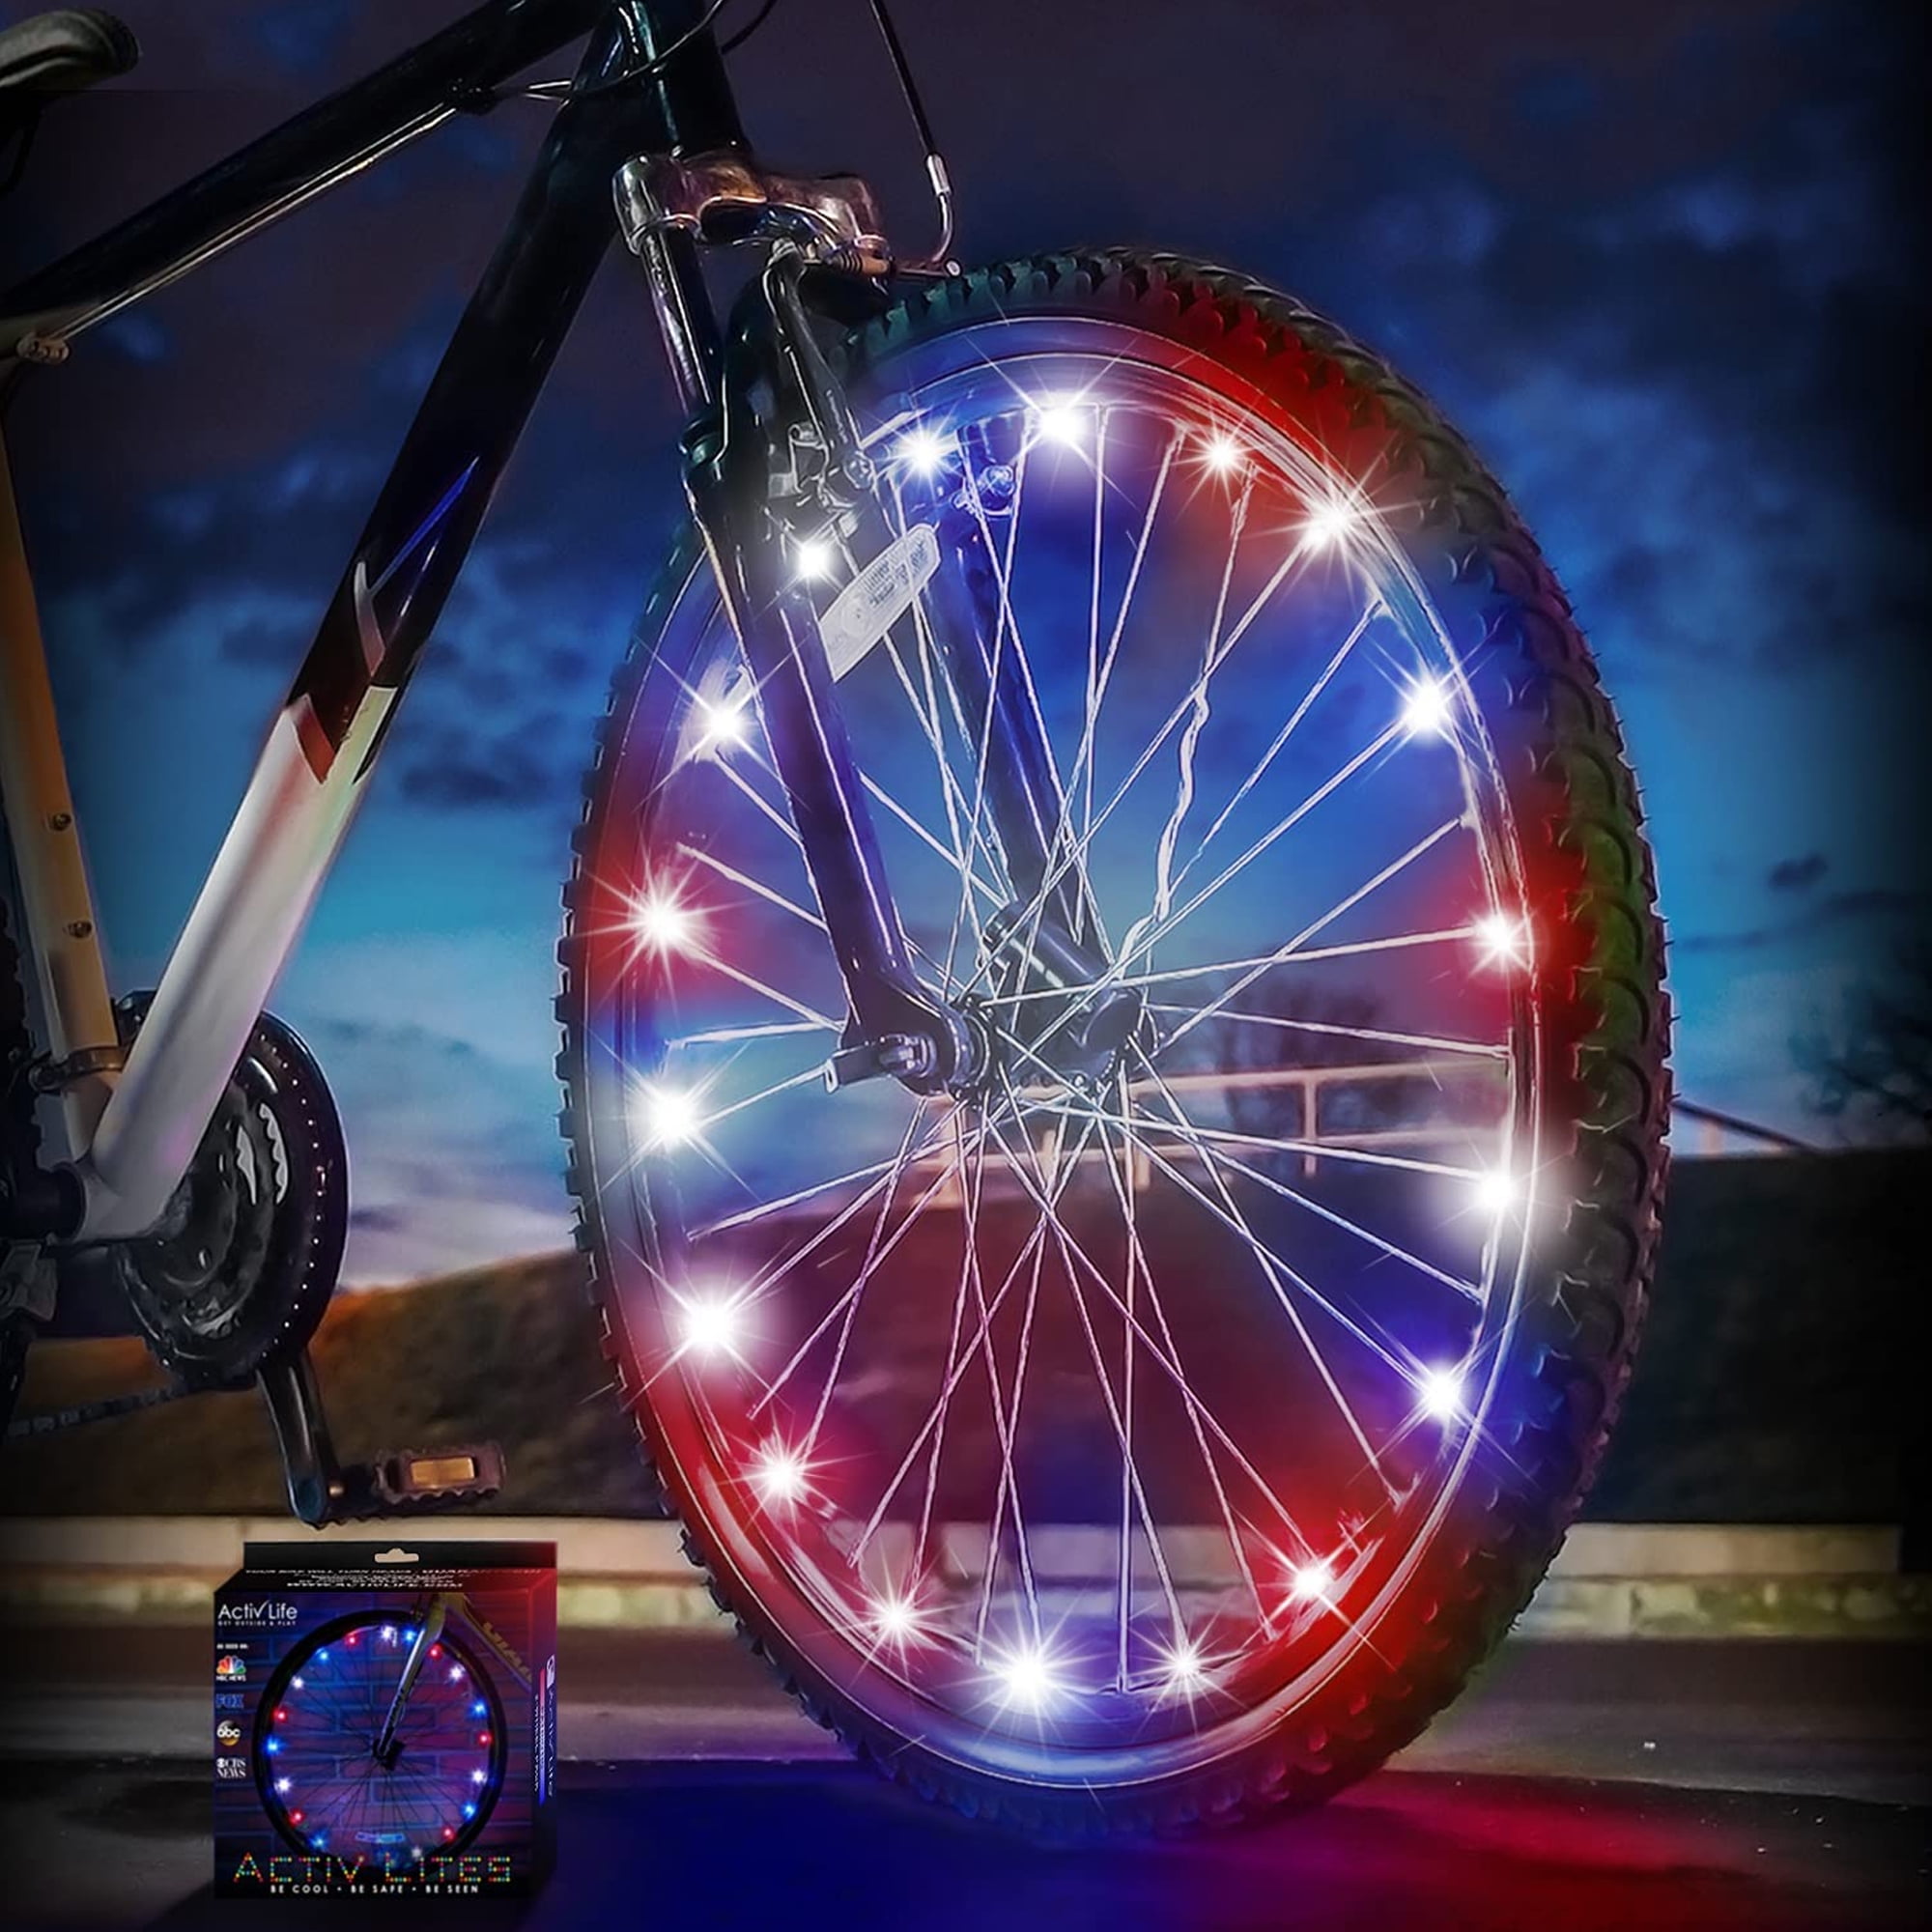 Activ Life LED Bike Wheel Lights Bicycle Spoke Light for Night Riding - Walmart.com